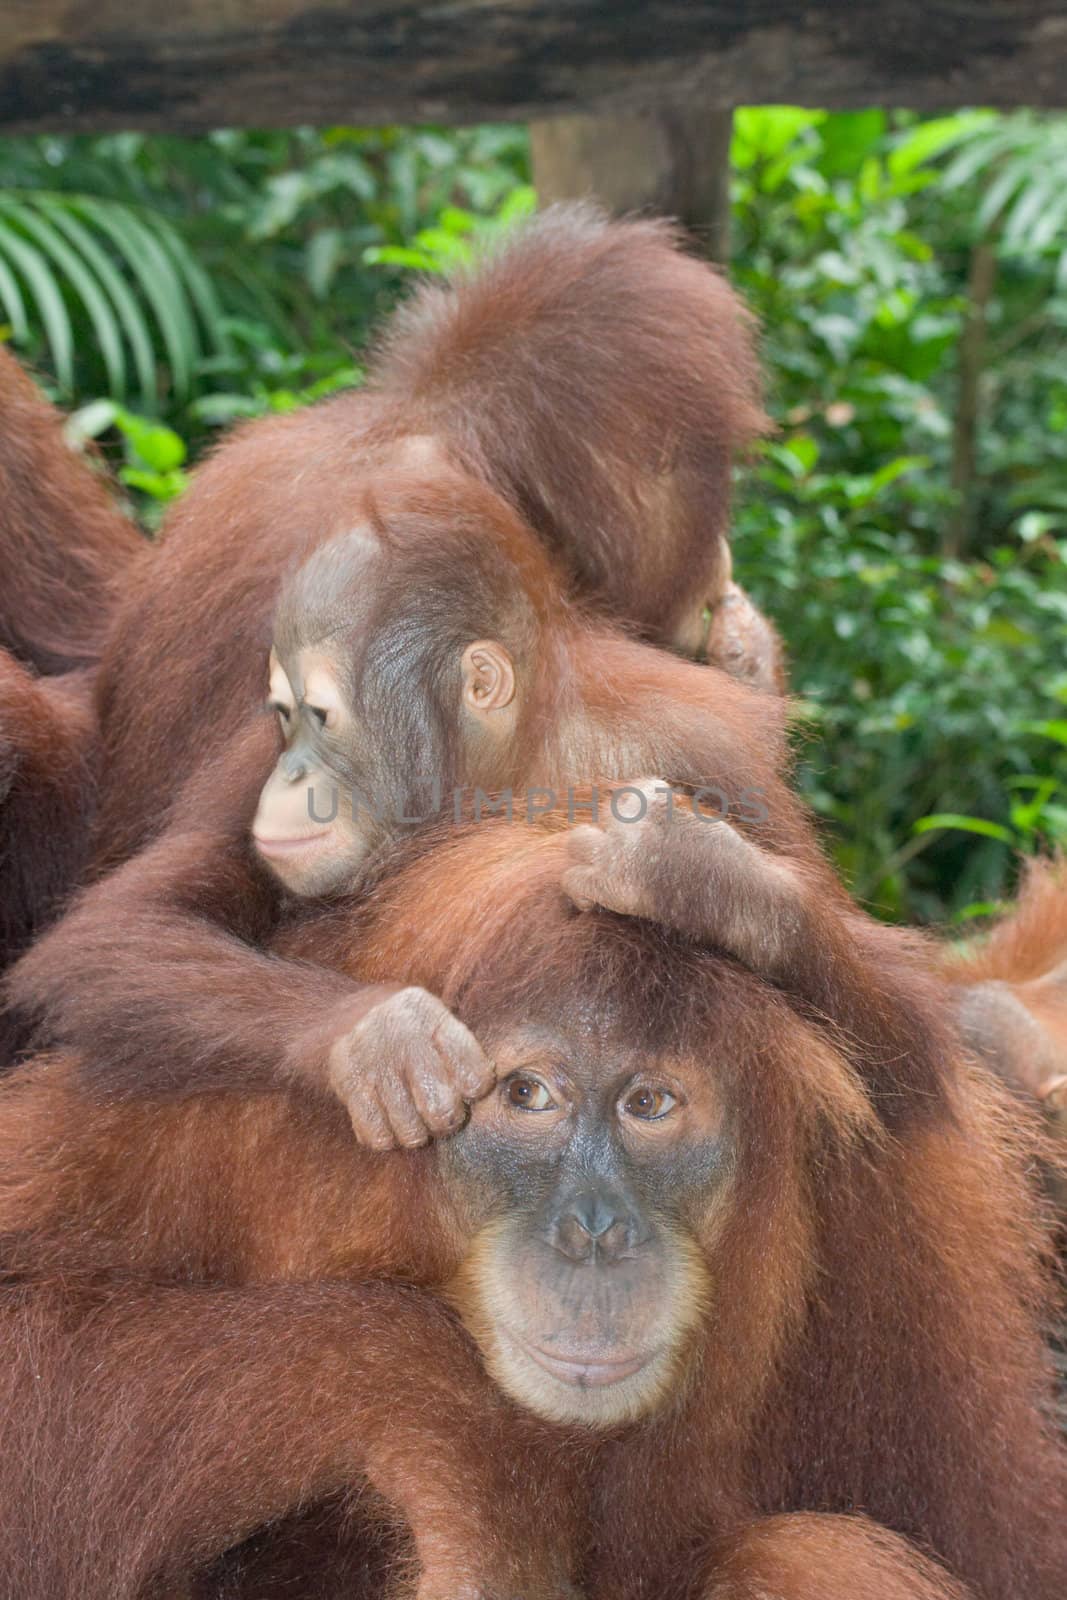 Orangutan family by dimol